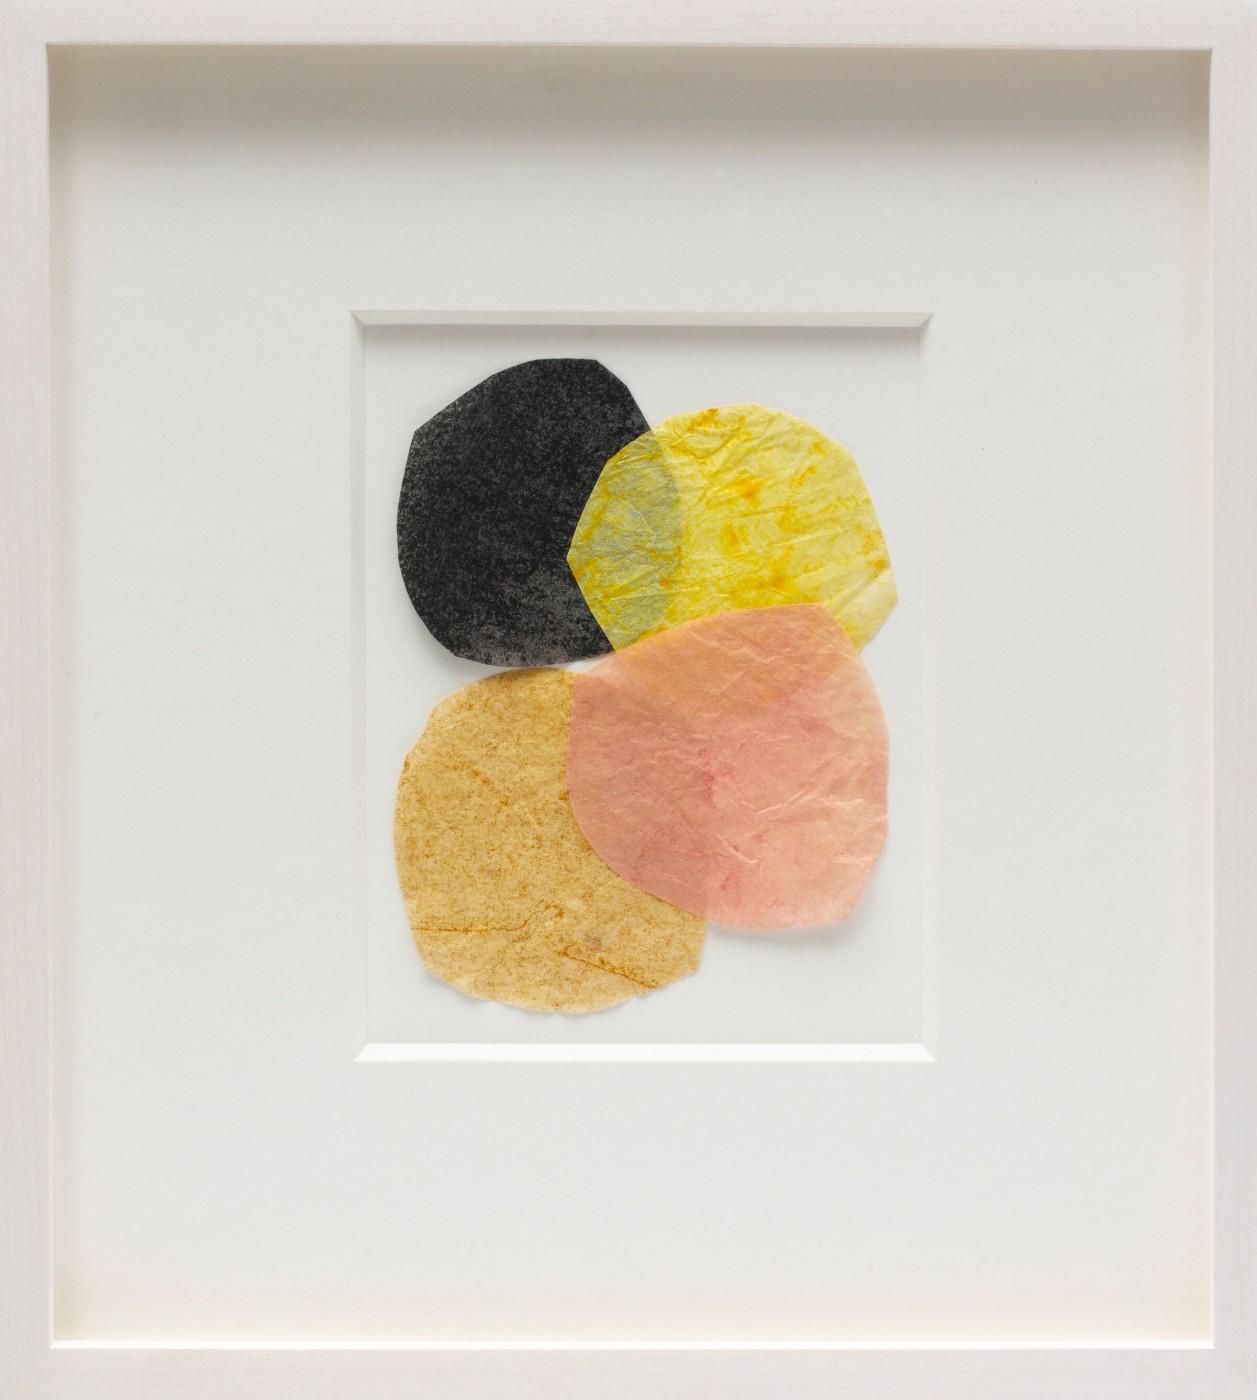 Yto Barrada, "Untitled (Dye filter collage 1)," 2018